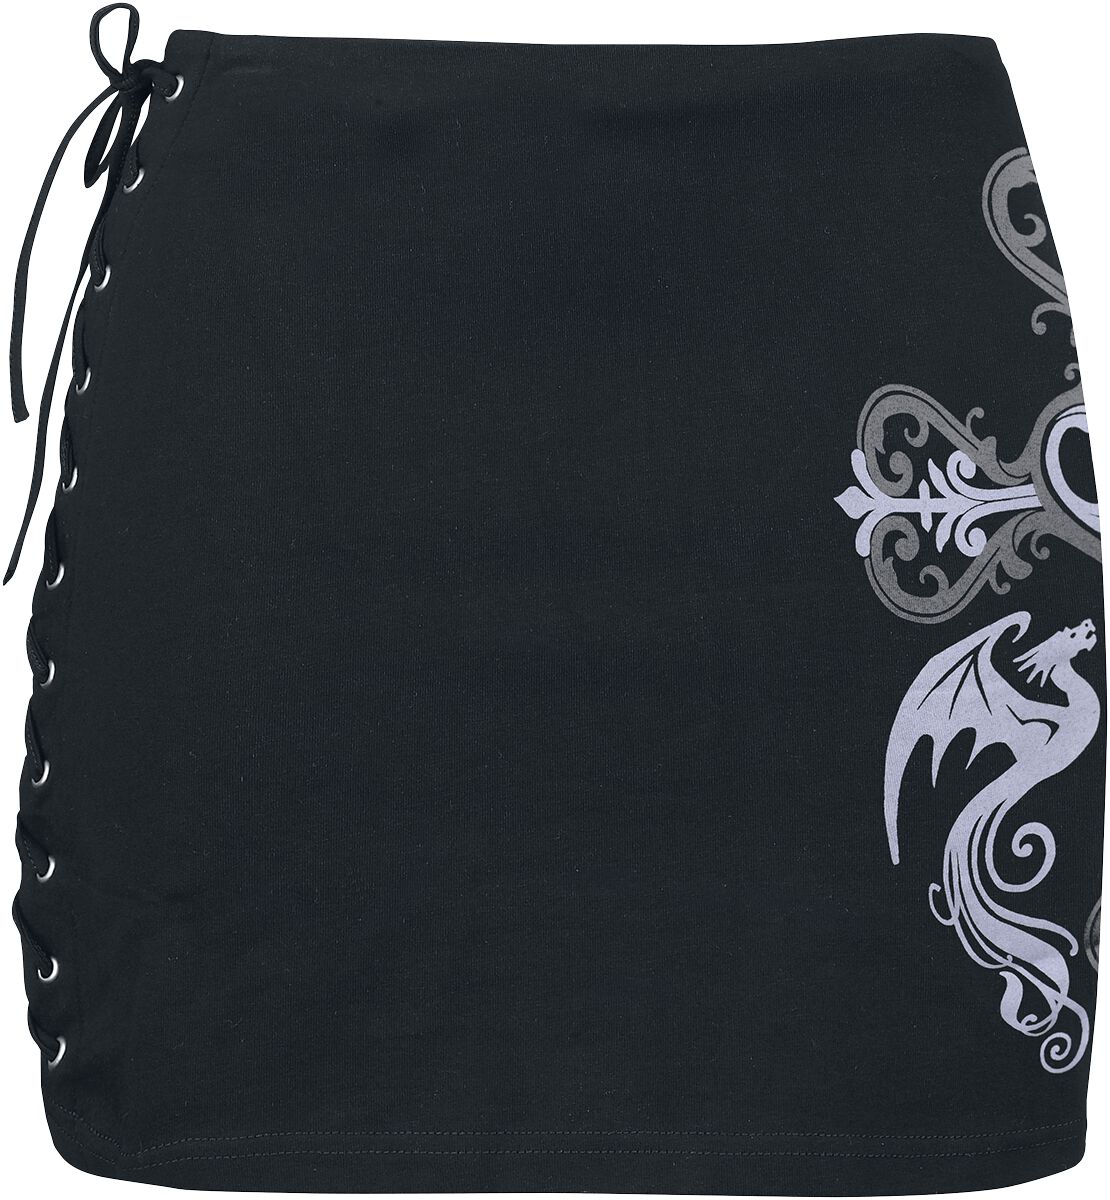 Gothicana by EMP - Gothic Kurzer Rock - Gothicana X Anne Stokes - Skirt With Lacing And Lace - XS bis XXL - für Damen - Größe XS - schwarz